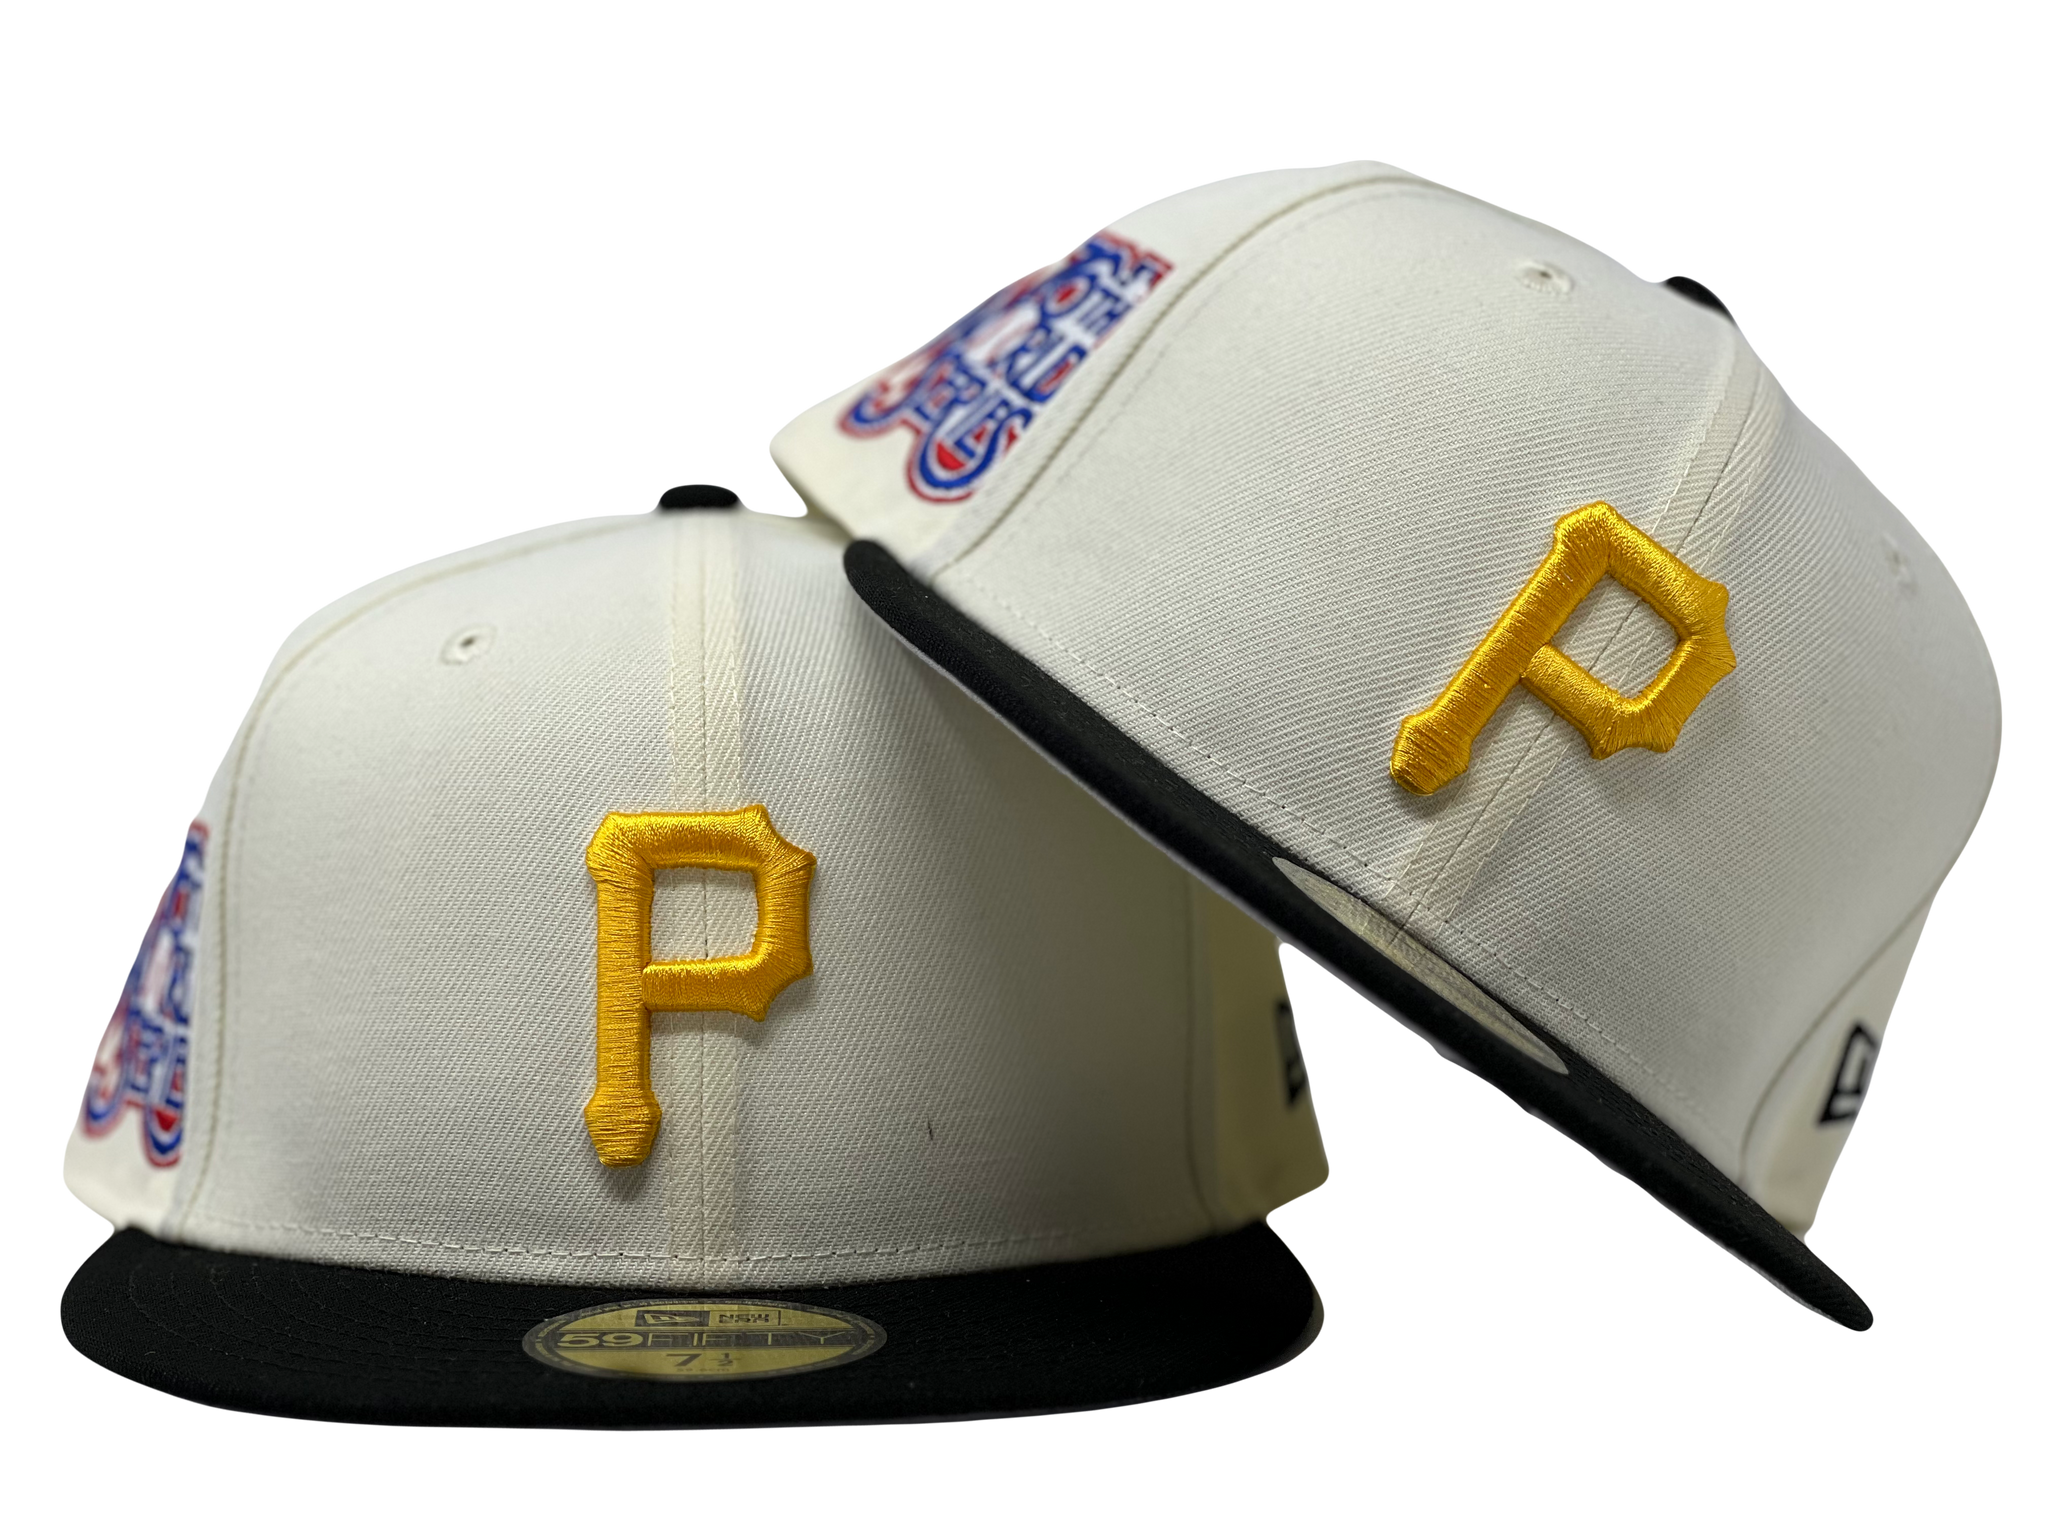 1979 pittsburgh pirates hat